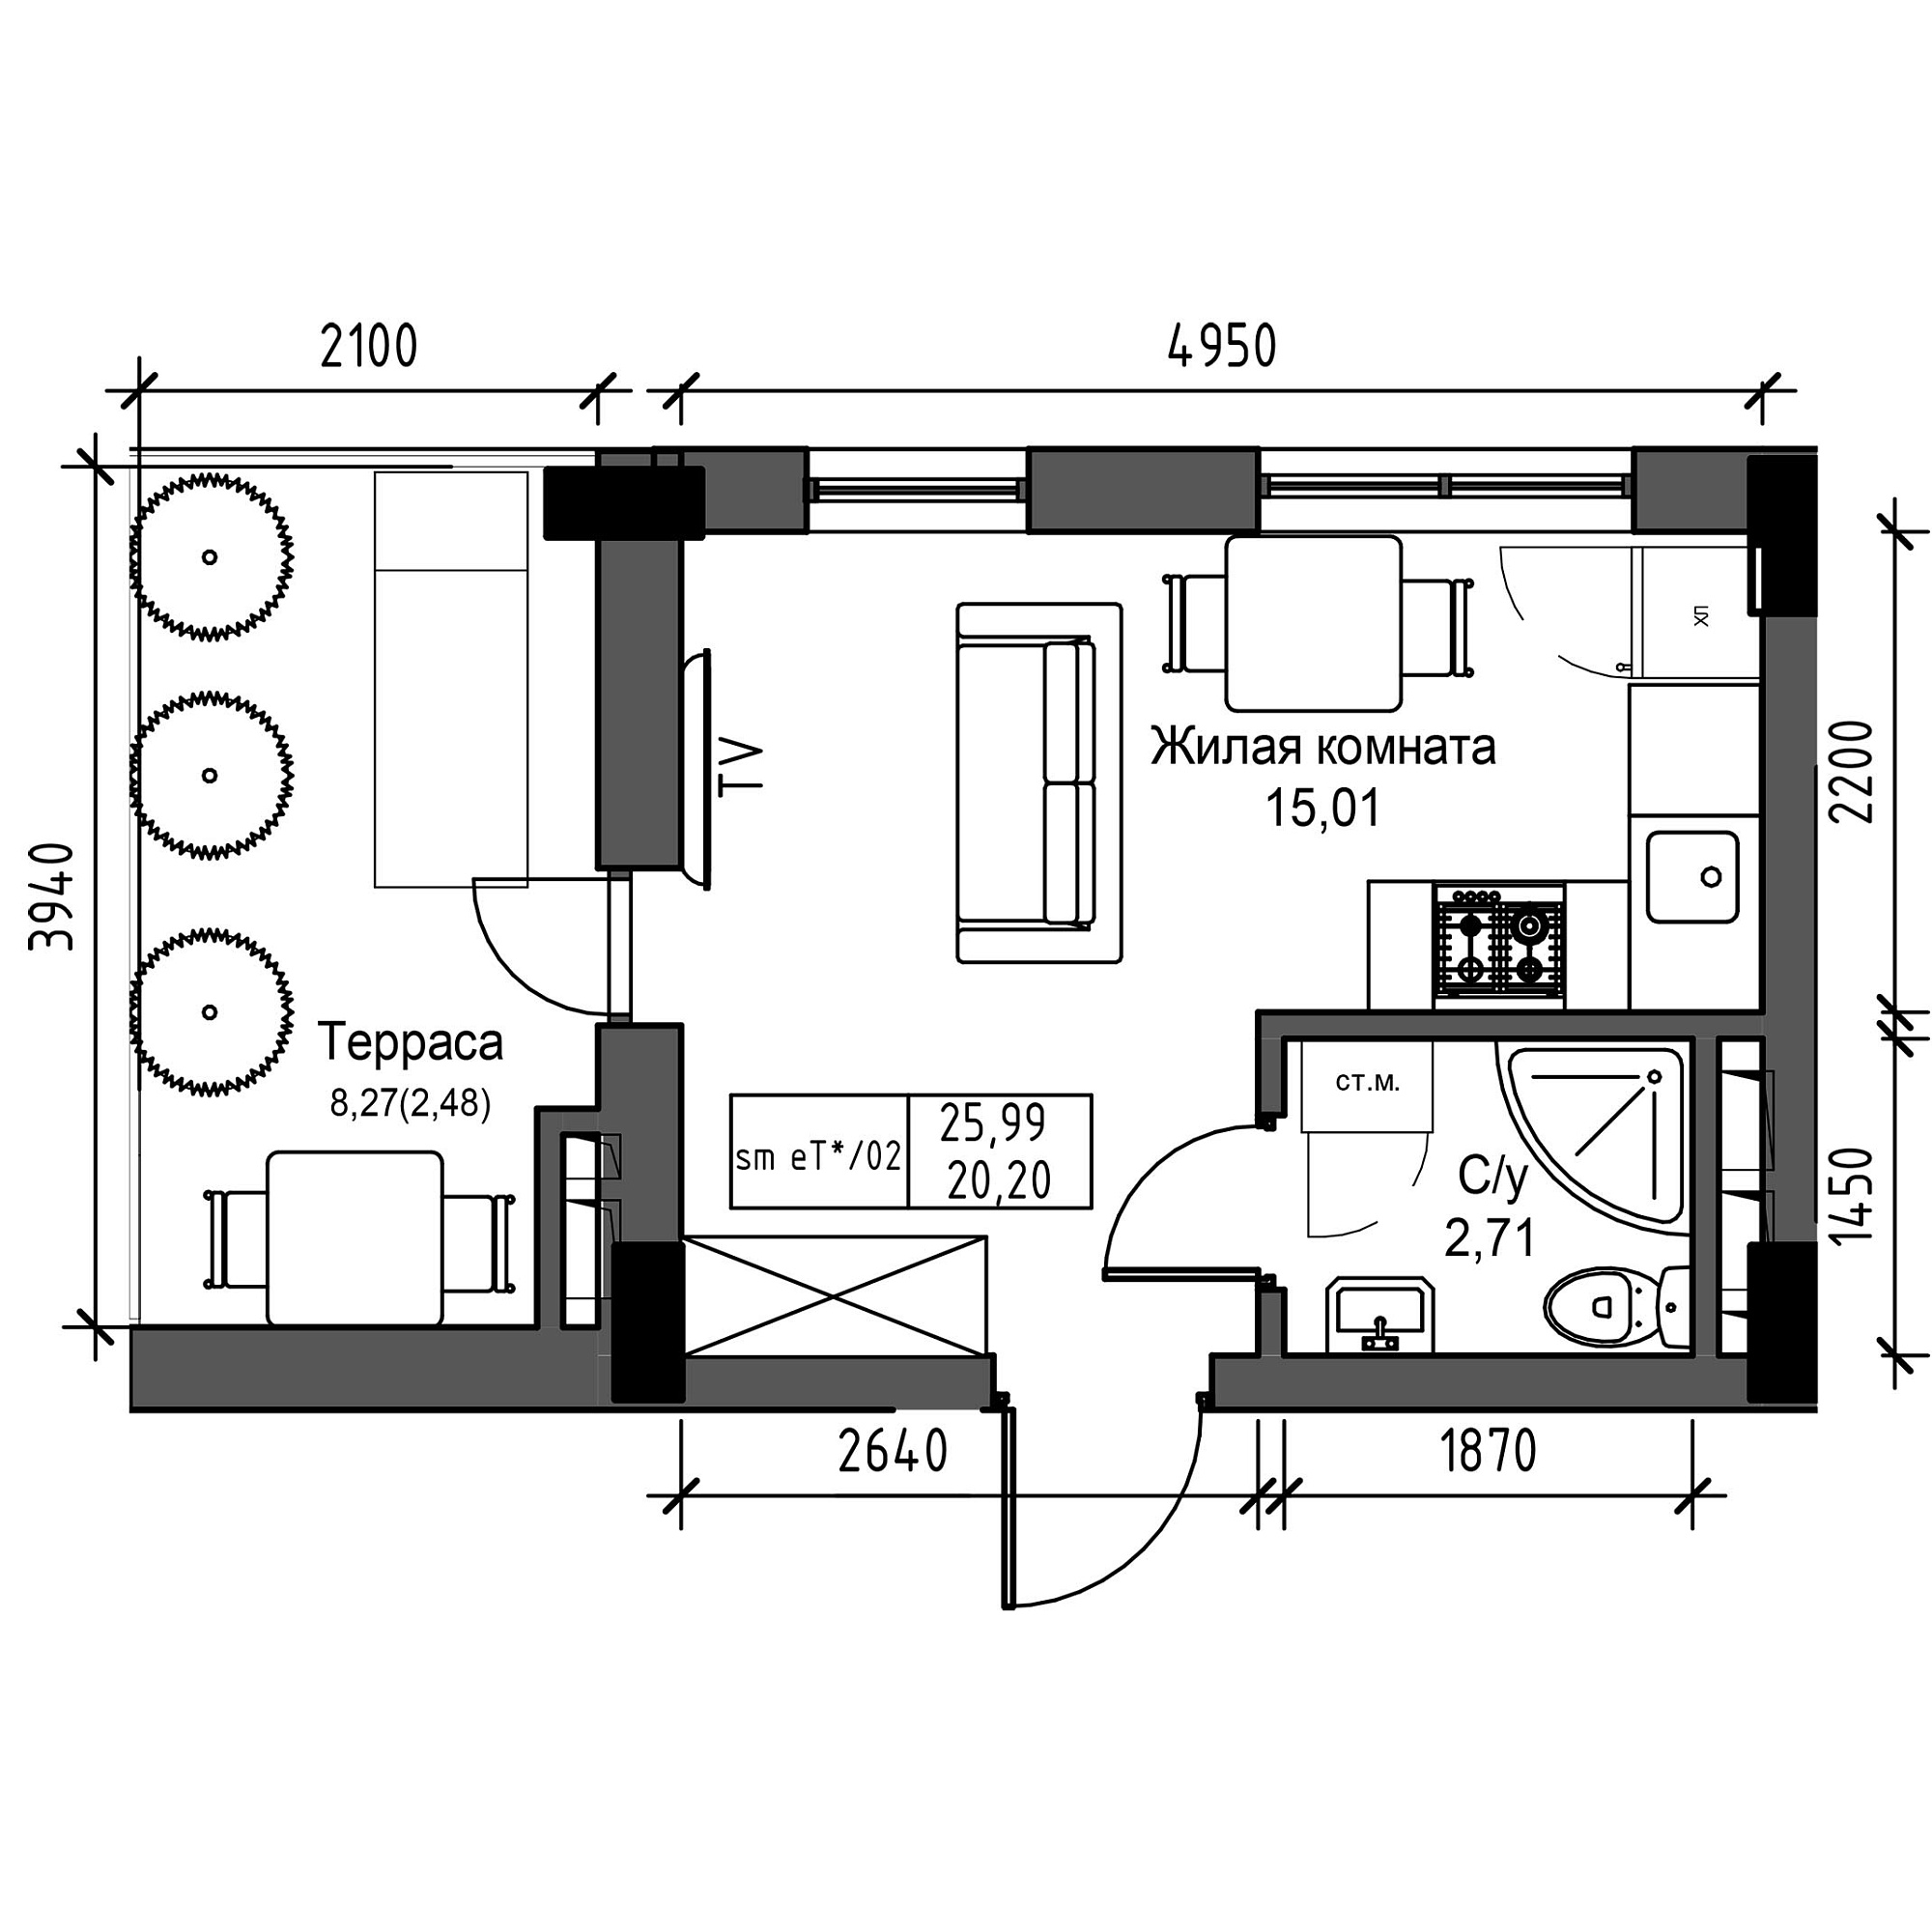 Планування Smart-квартира площею 20.2м2, UM-003-06/0063.